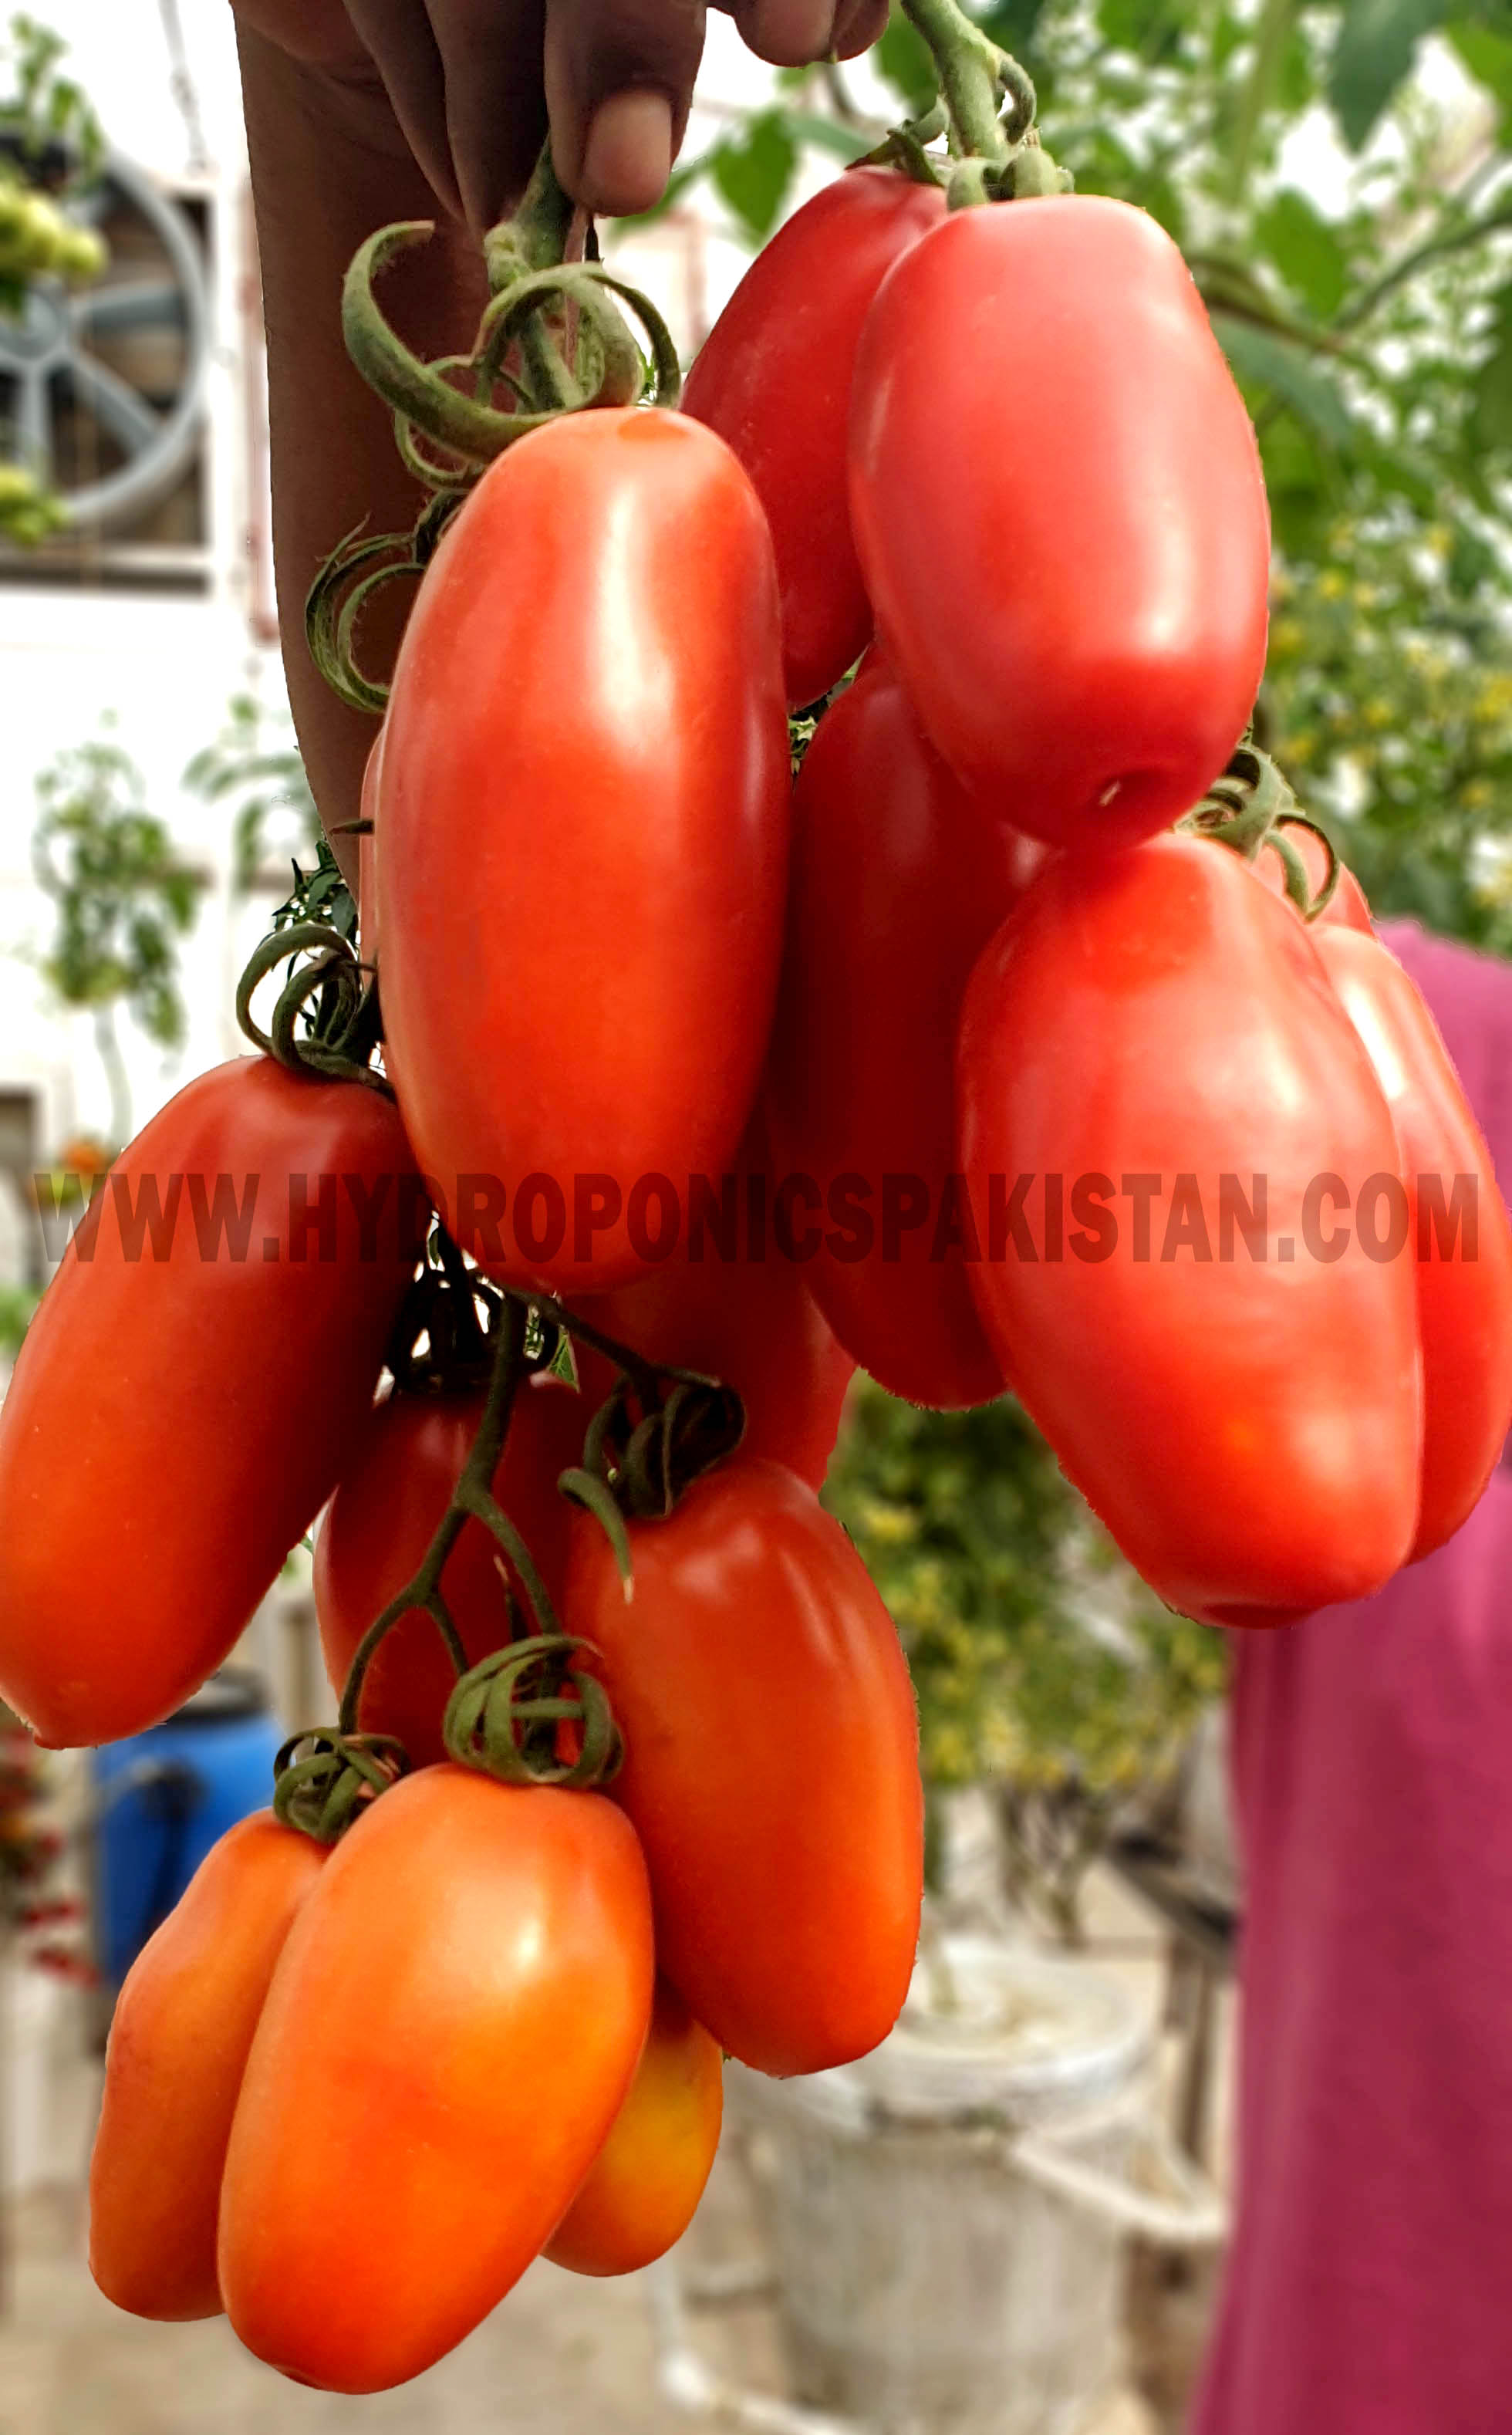 1_Hydroponics-Pakistan-Pakistan-Hydroponics-Plum-Tomato-Cluster